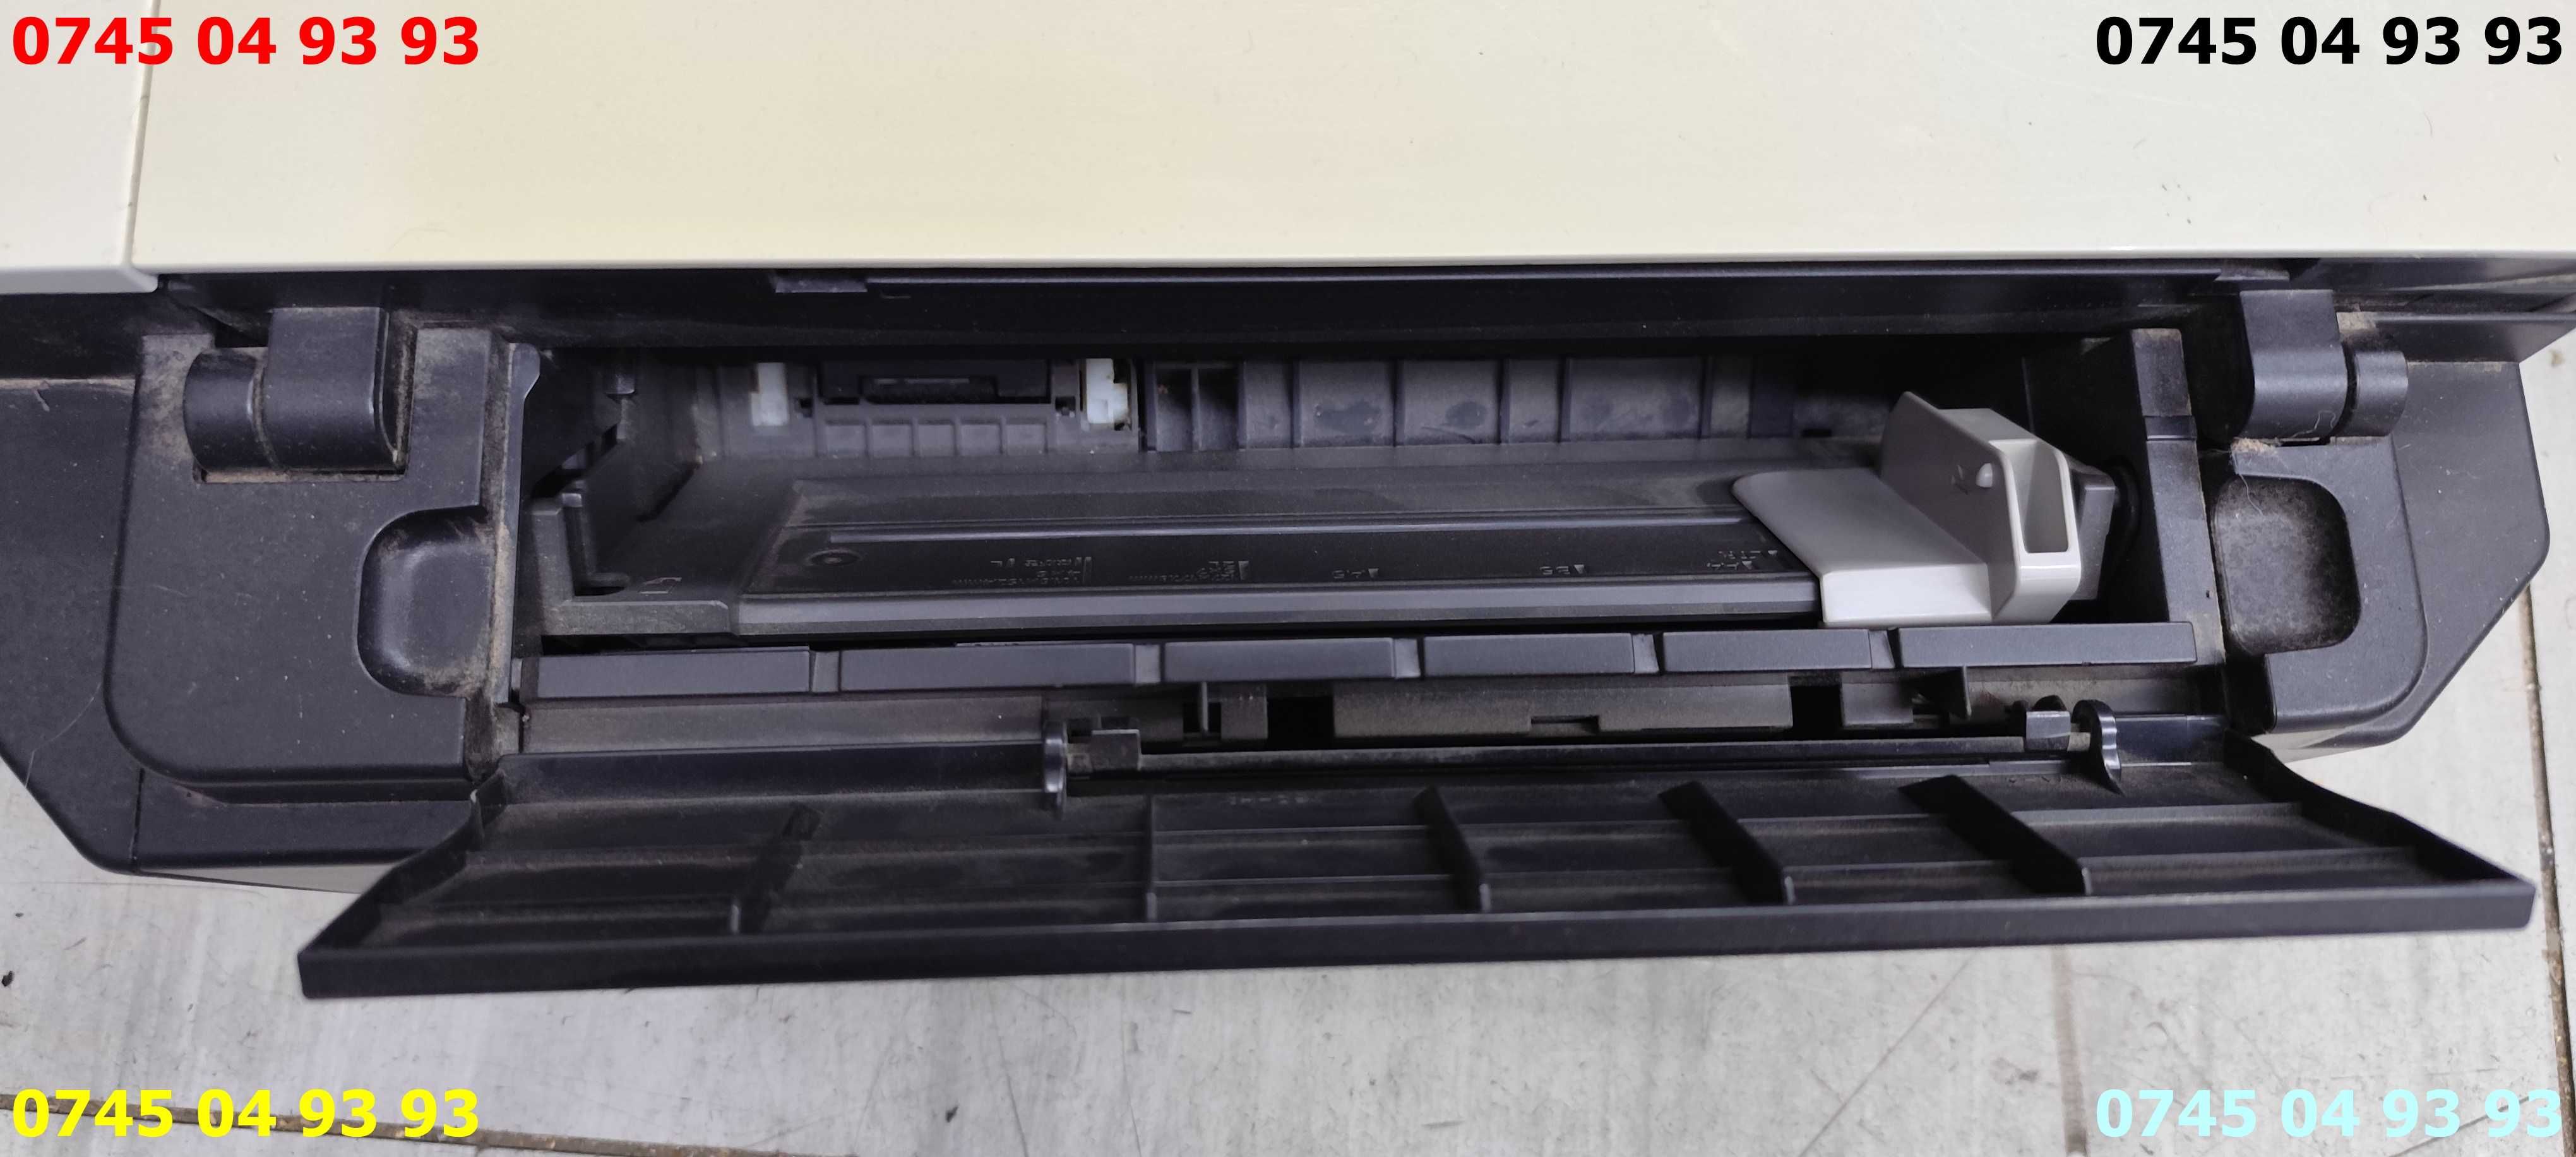 multifunctionala scaner imprimanta canon MP220 cartusele tre schimbate